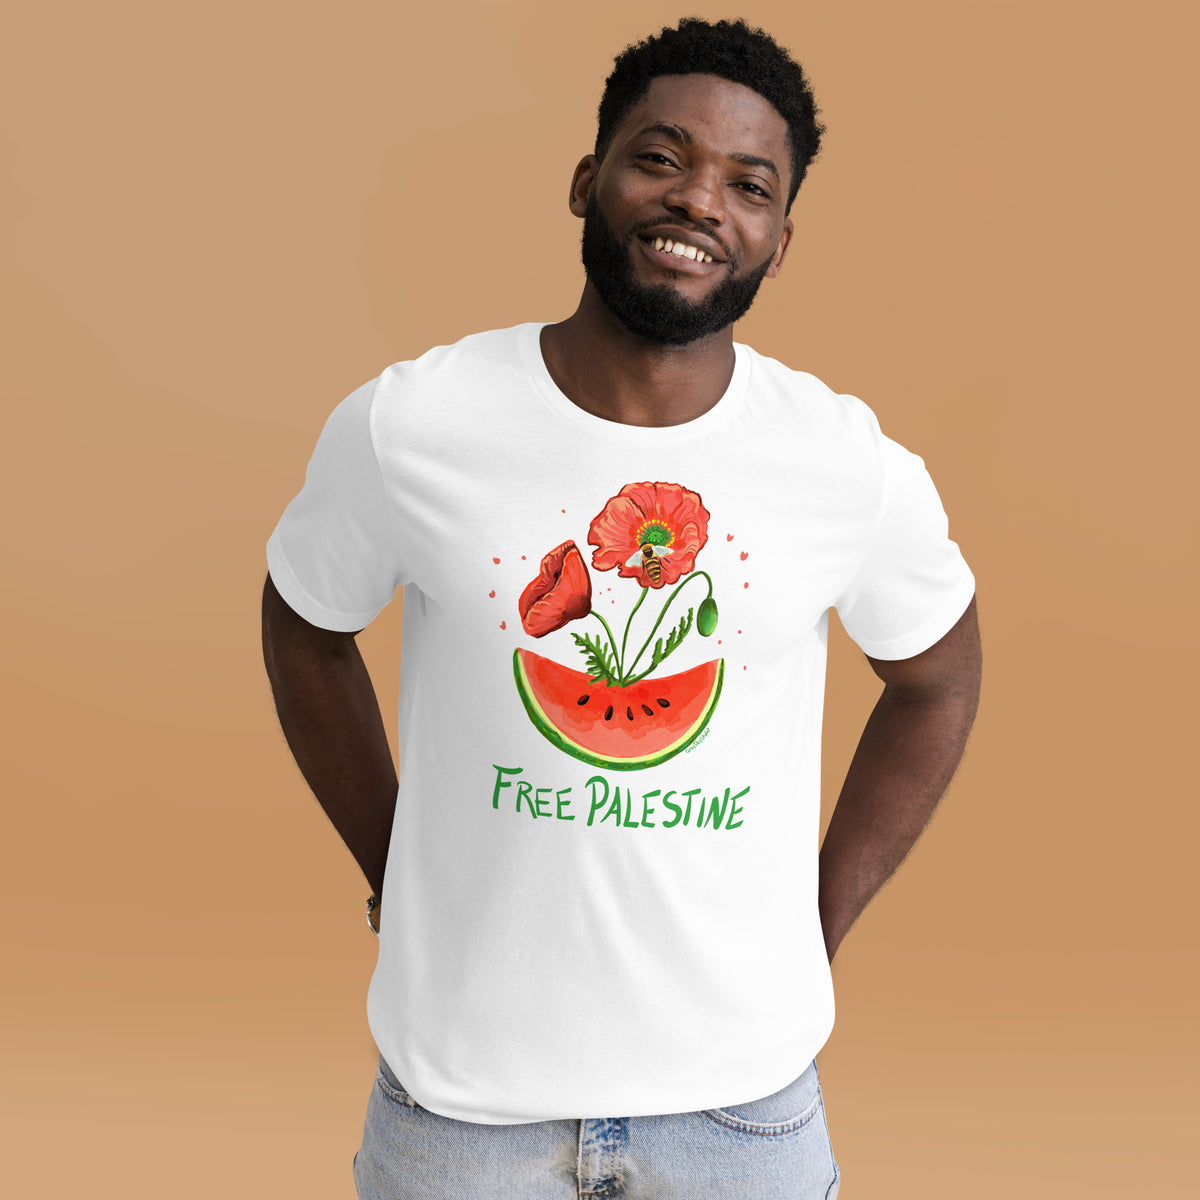 Free Palestine, Watermelon and Poppy T-Shirt